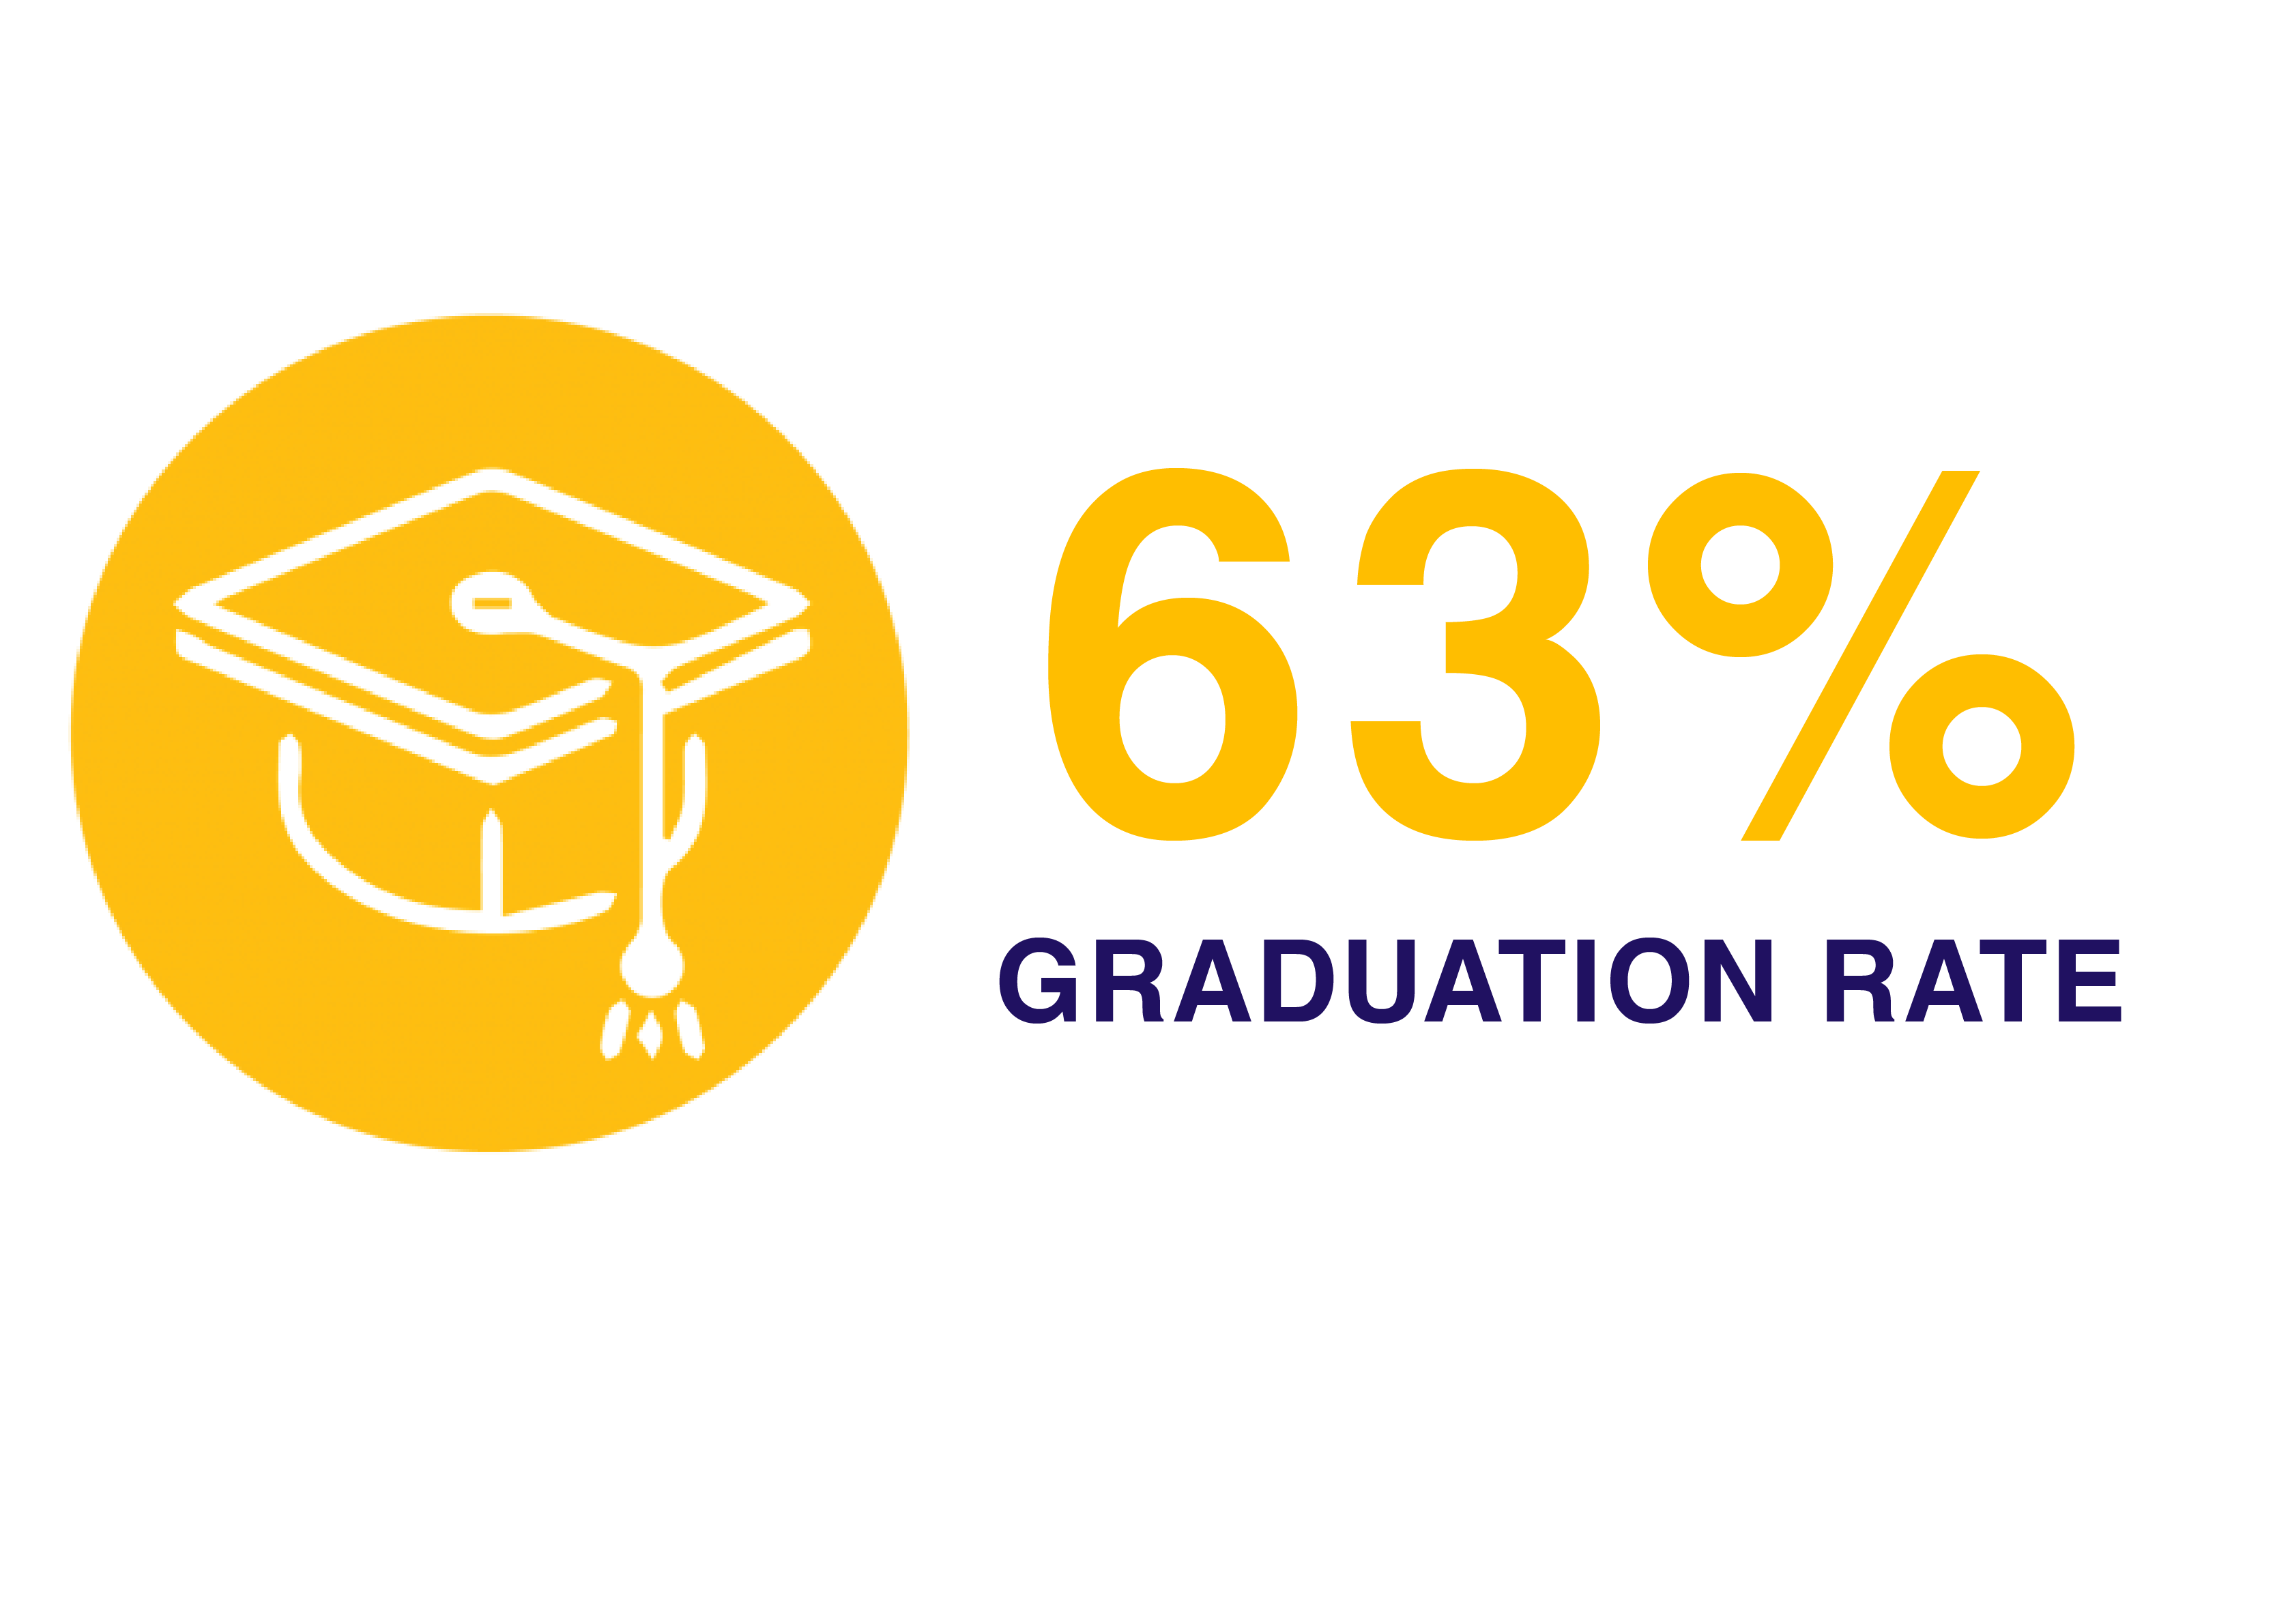 63% graduation rate